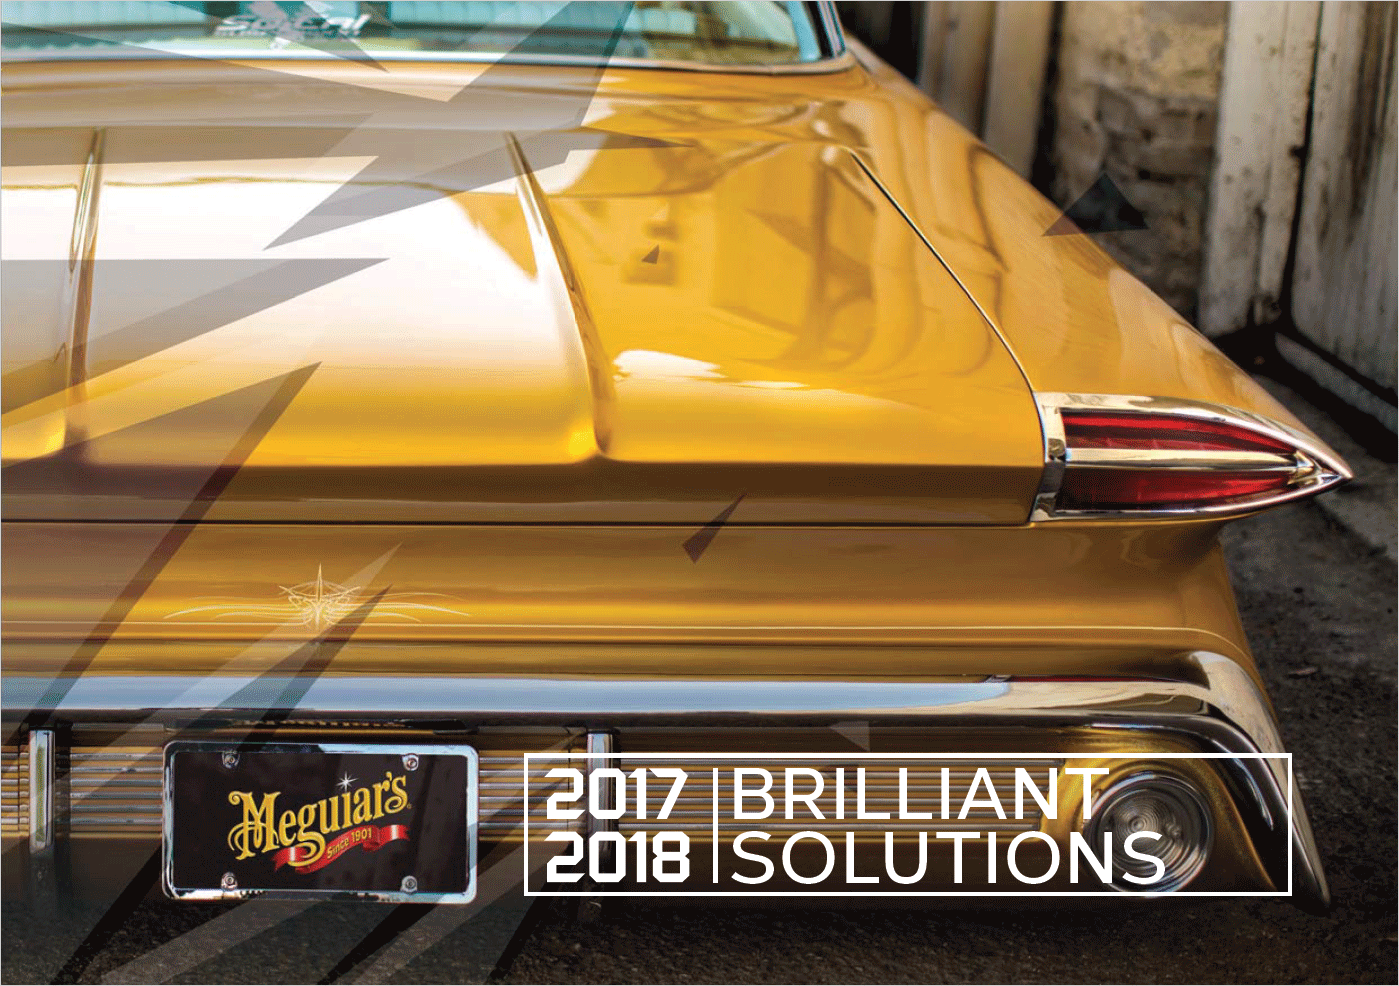 Meguiar's Brilliant Solutions 2017 2018 Katalog bei Premium-Lackpflege